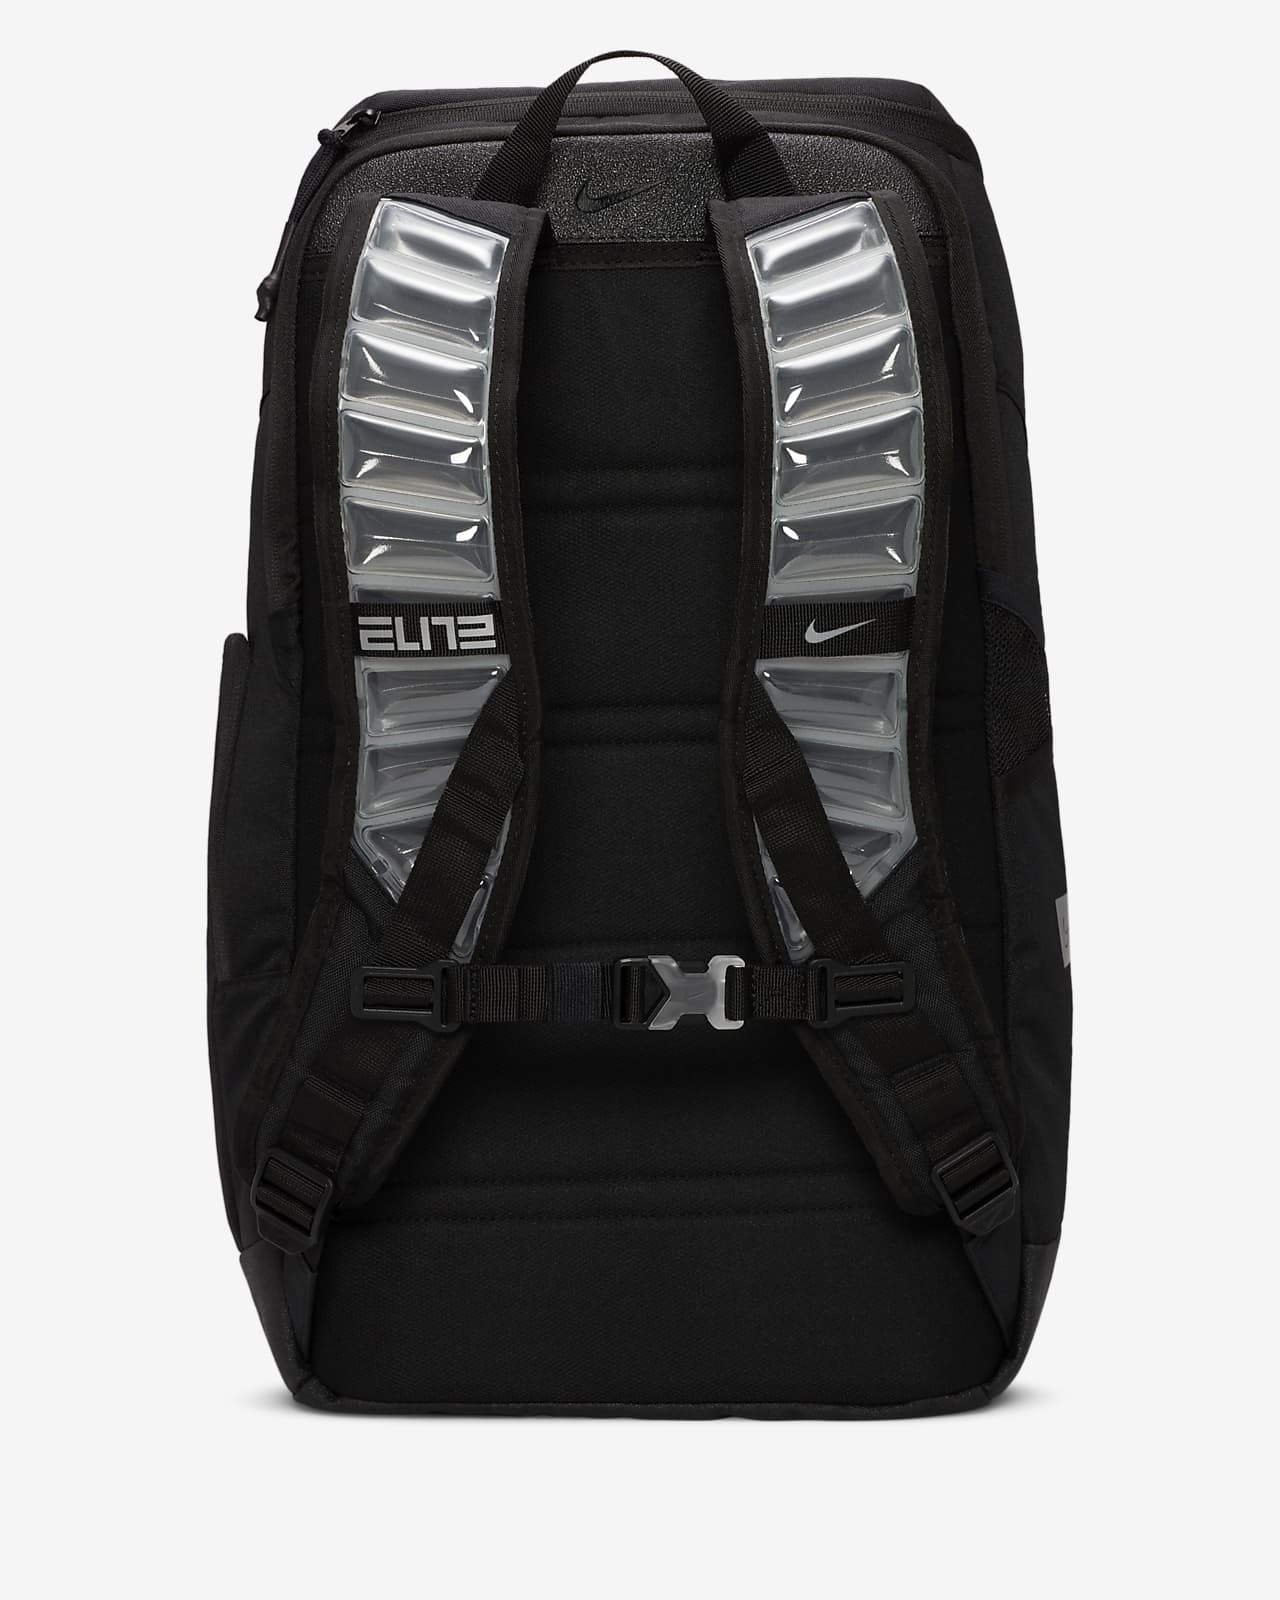 Nike Pro Basketball Backpack (32L).